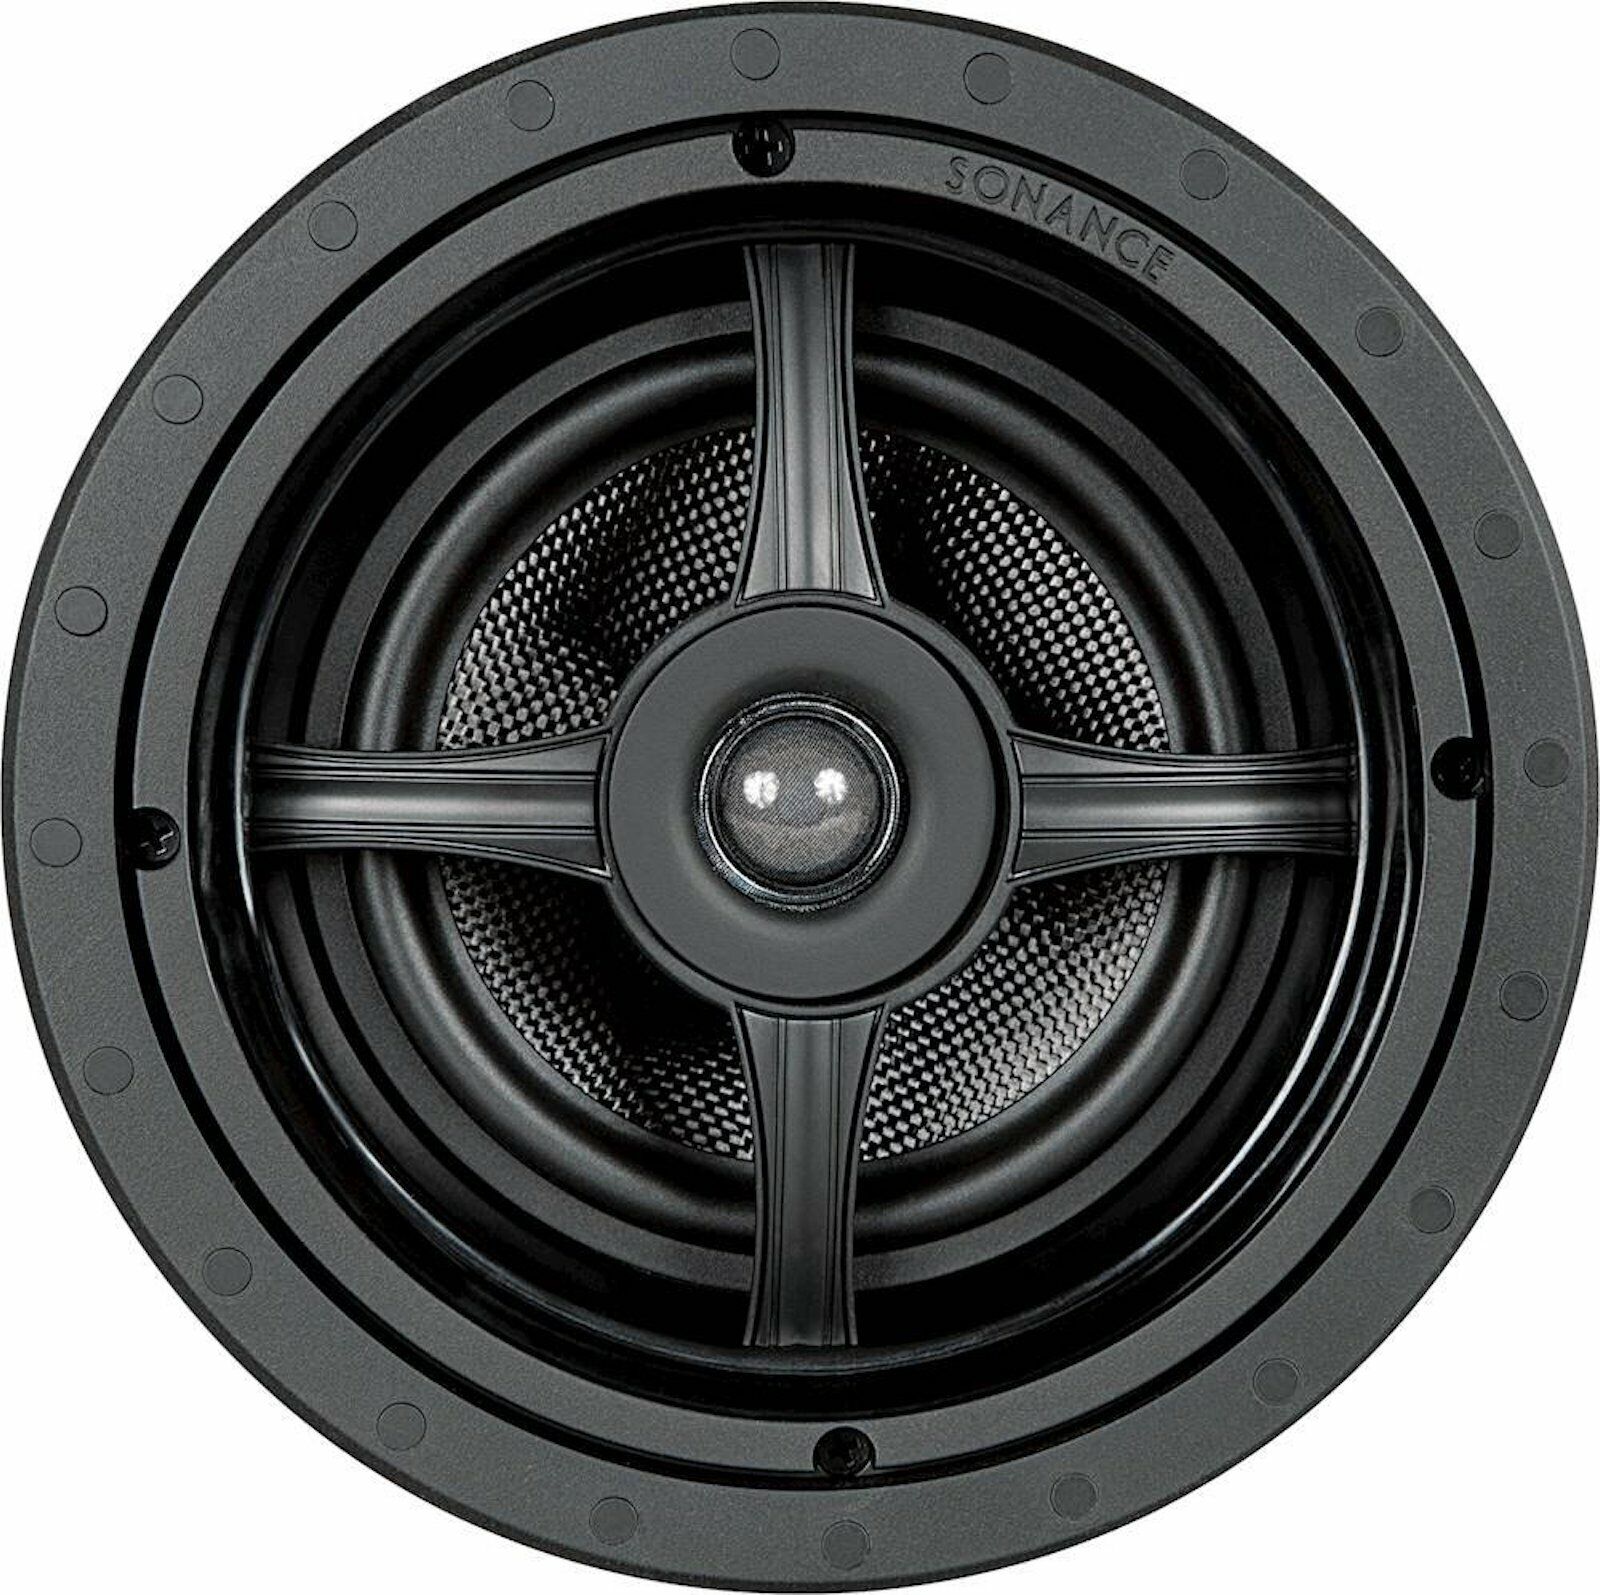 Sonance 6.5" InCeiling Speaker System MAG5.1R 725W Coaxial RCA Black (Set of 5) eBay